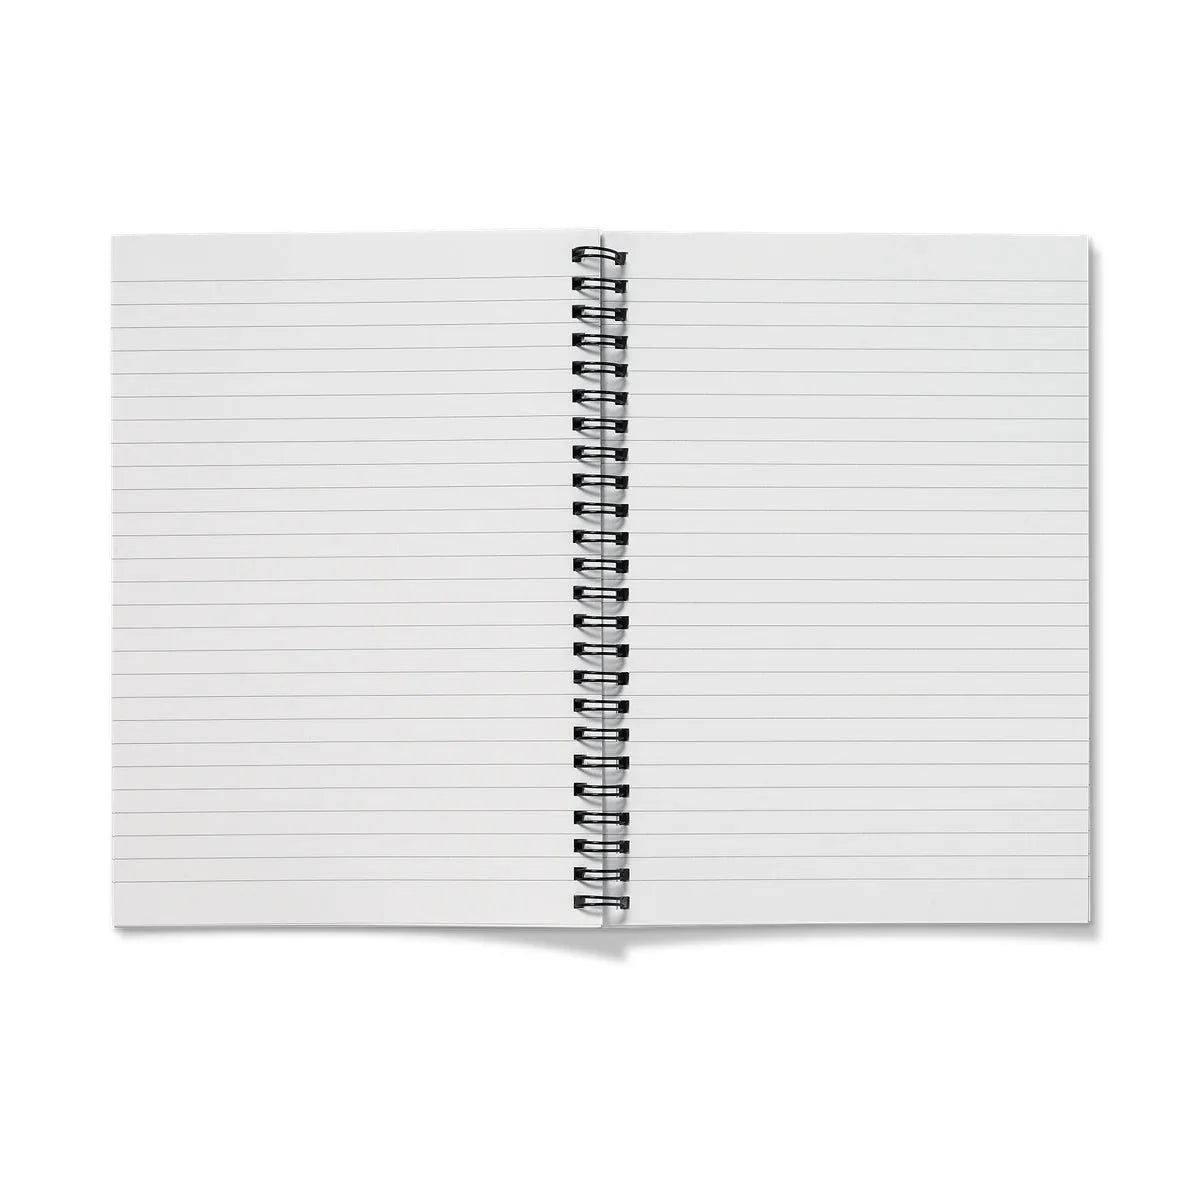 Peacocky Notebook - Notebooks & Notepads - Aesthetic Art